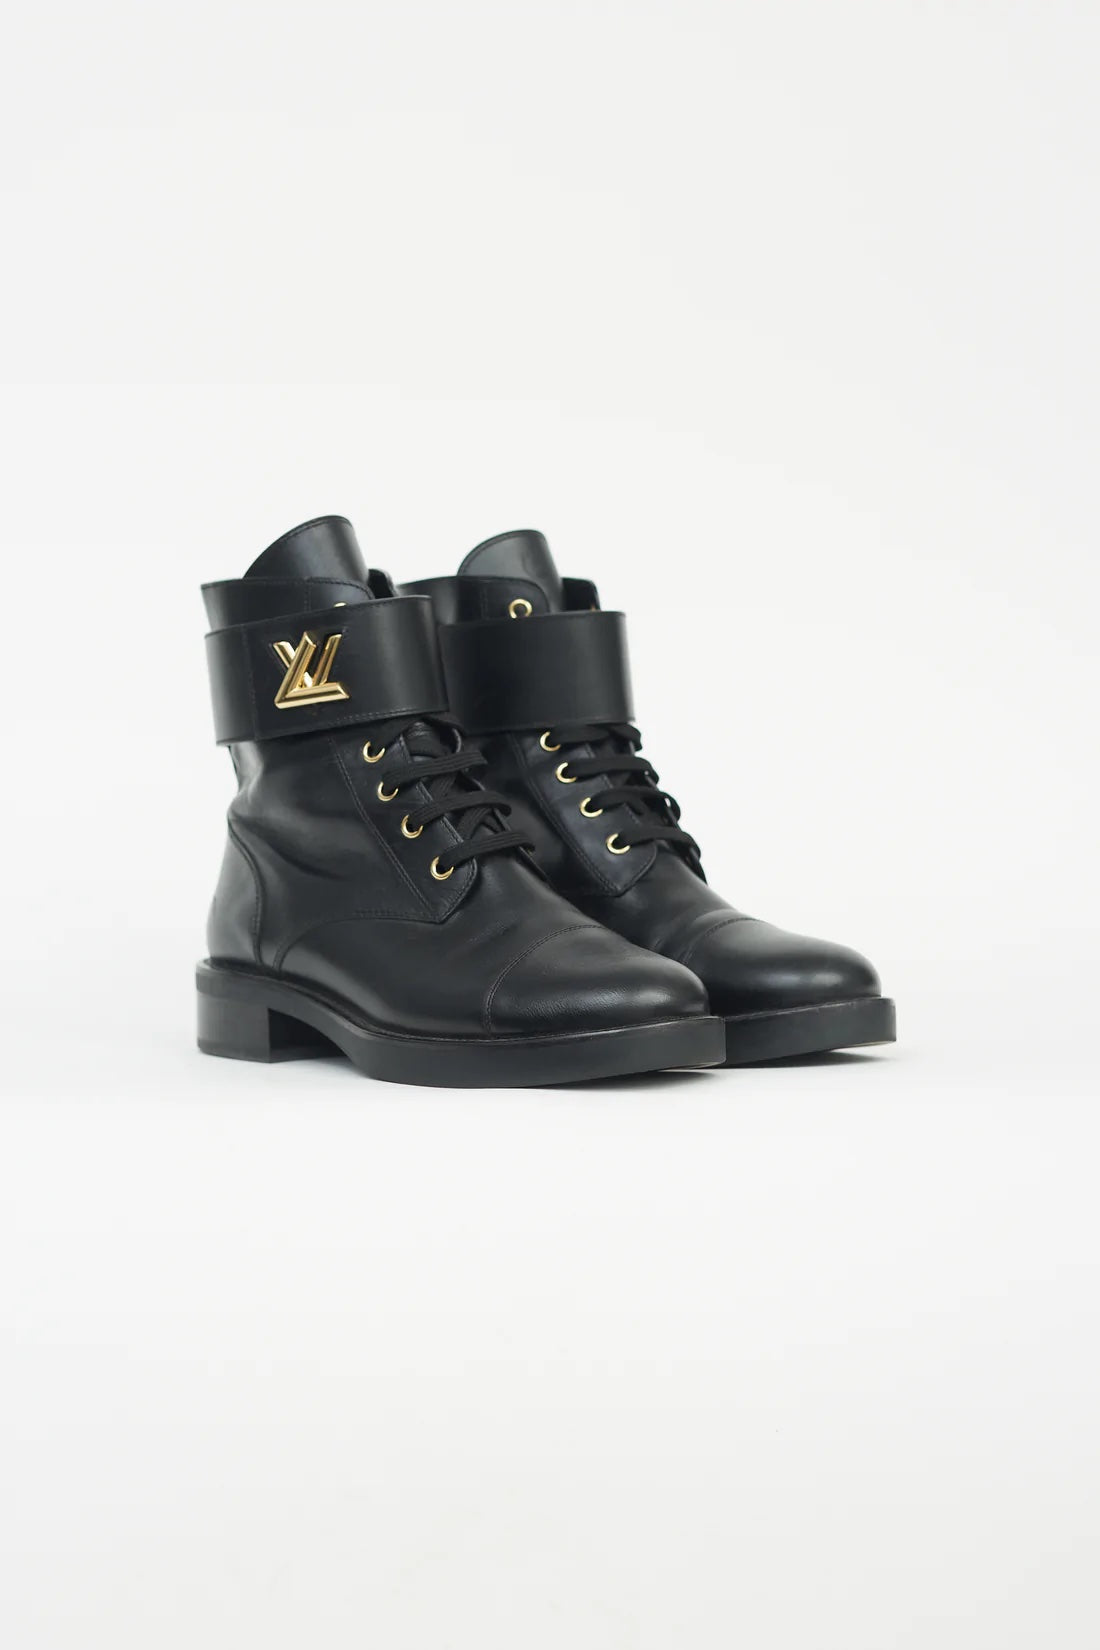 Pre-Loved Louis Vuitton Women's Black Leather Wonderland Flat Ranger Boots